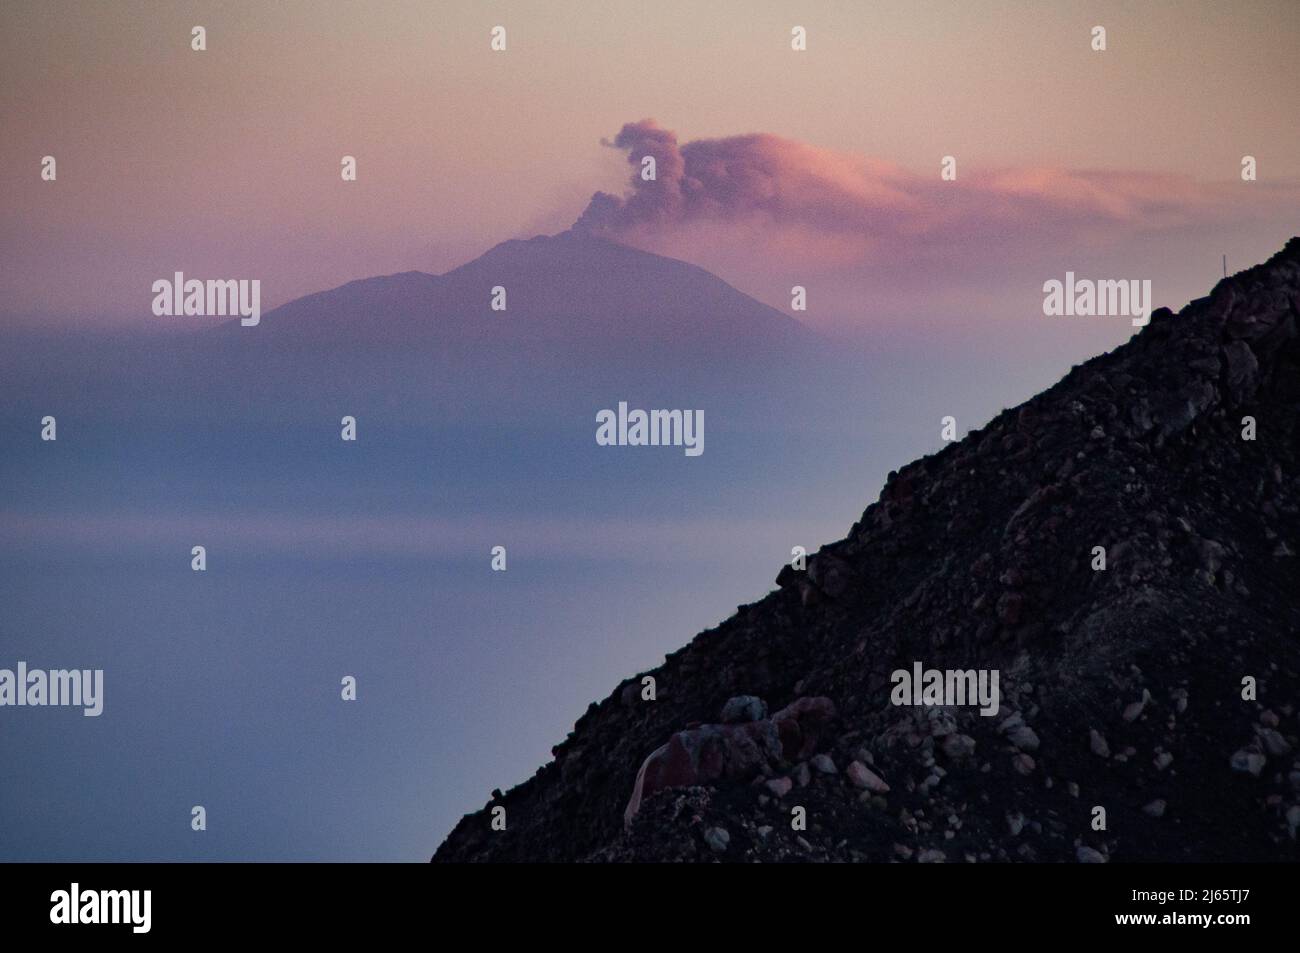 Heftiger Vulkanausbruch am Ätna, gesehen von der Insel Stromboli - parossismo sul Monte Etna, vista dall'isola di Stromboli Foto Stock